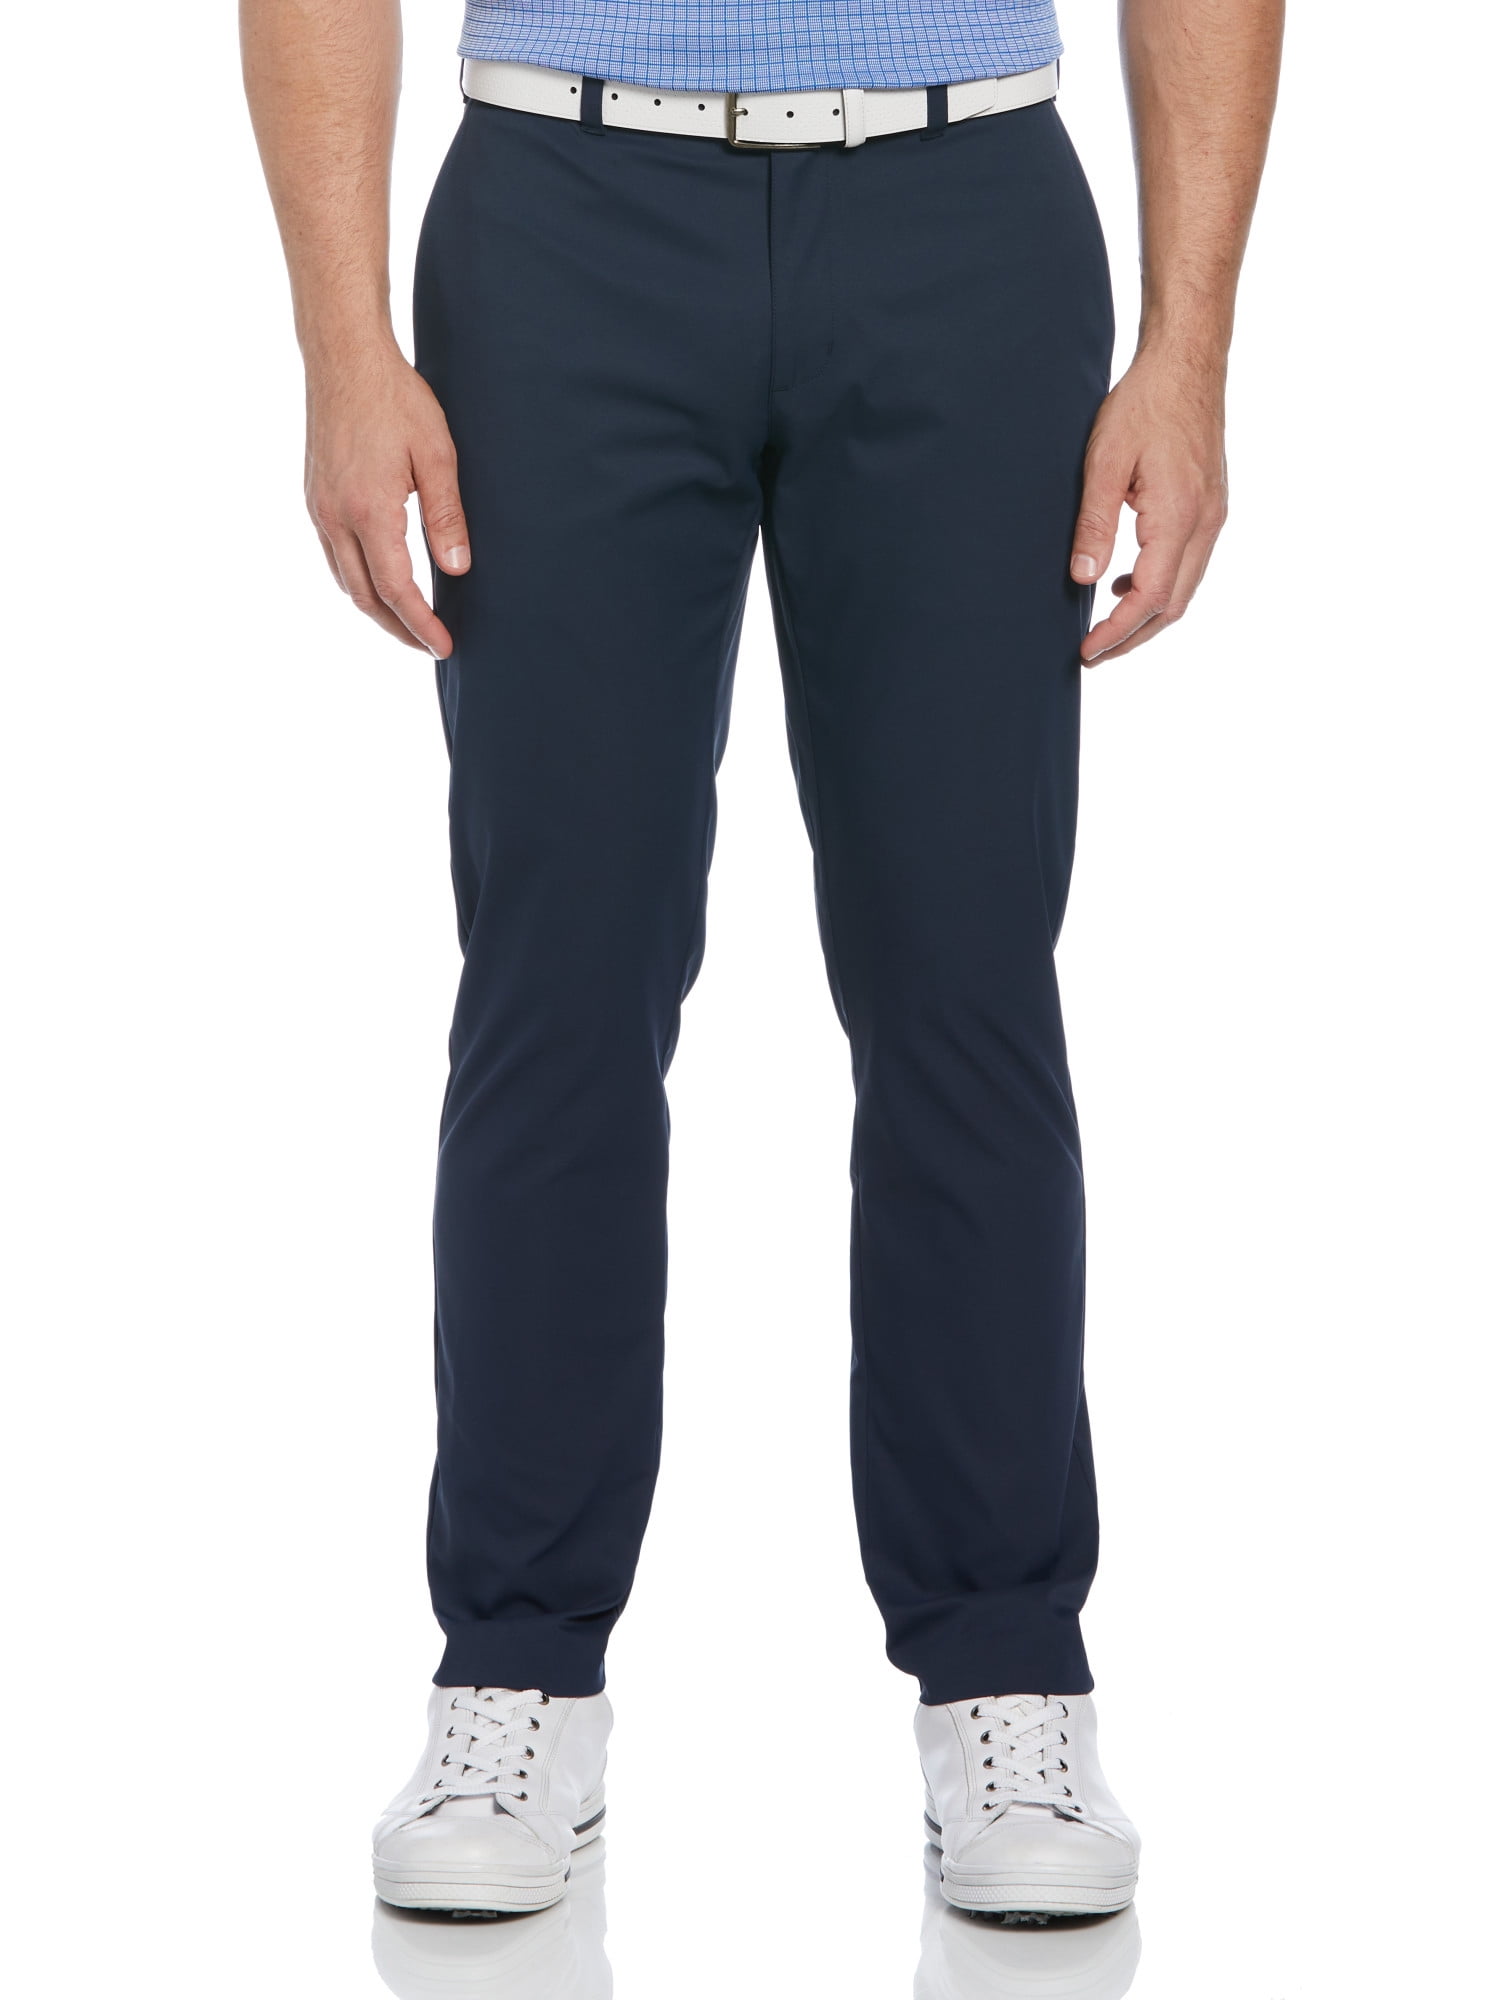 Men's Slim Golf Pants - All in Motion Navy 38x32 